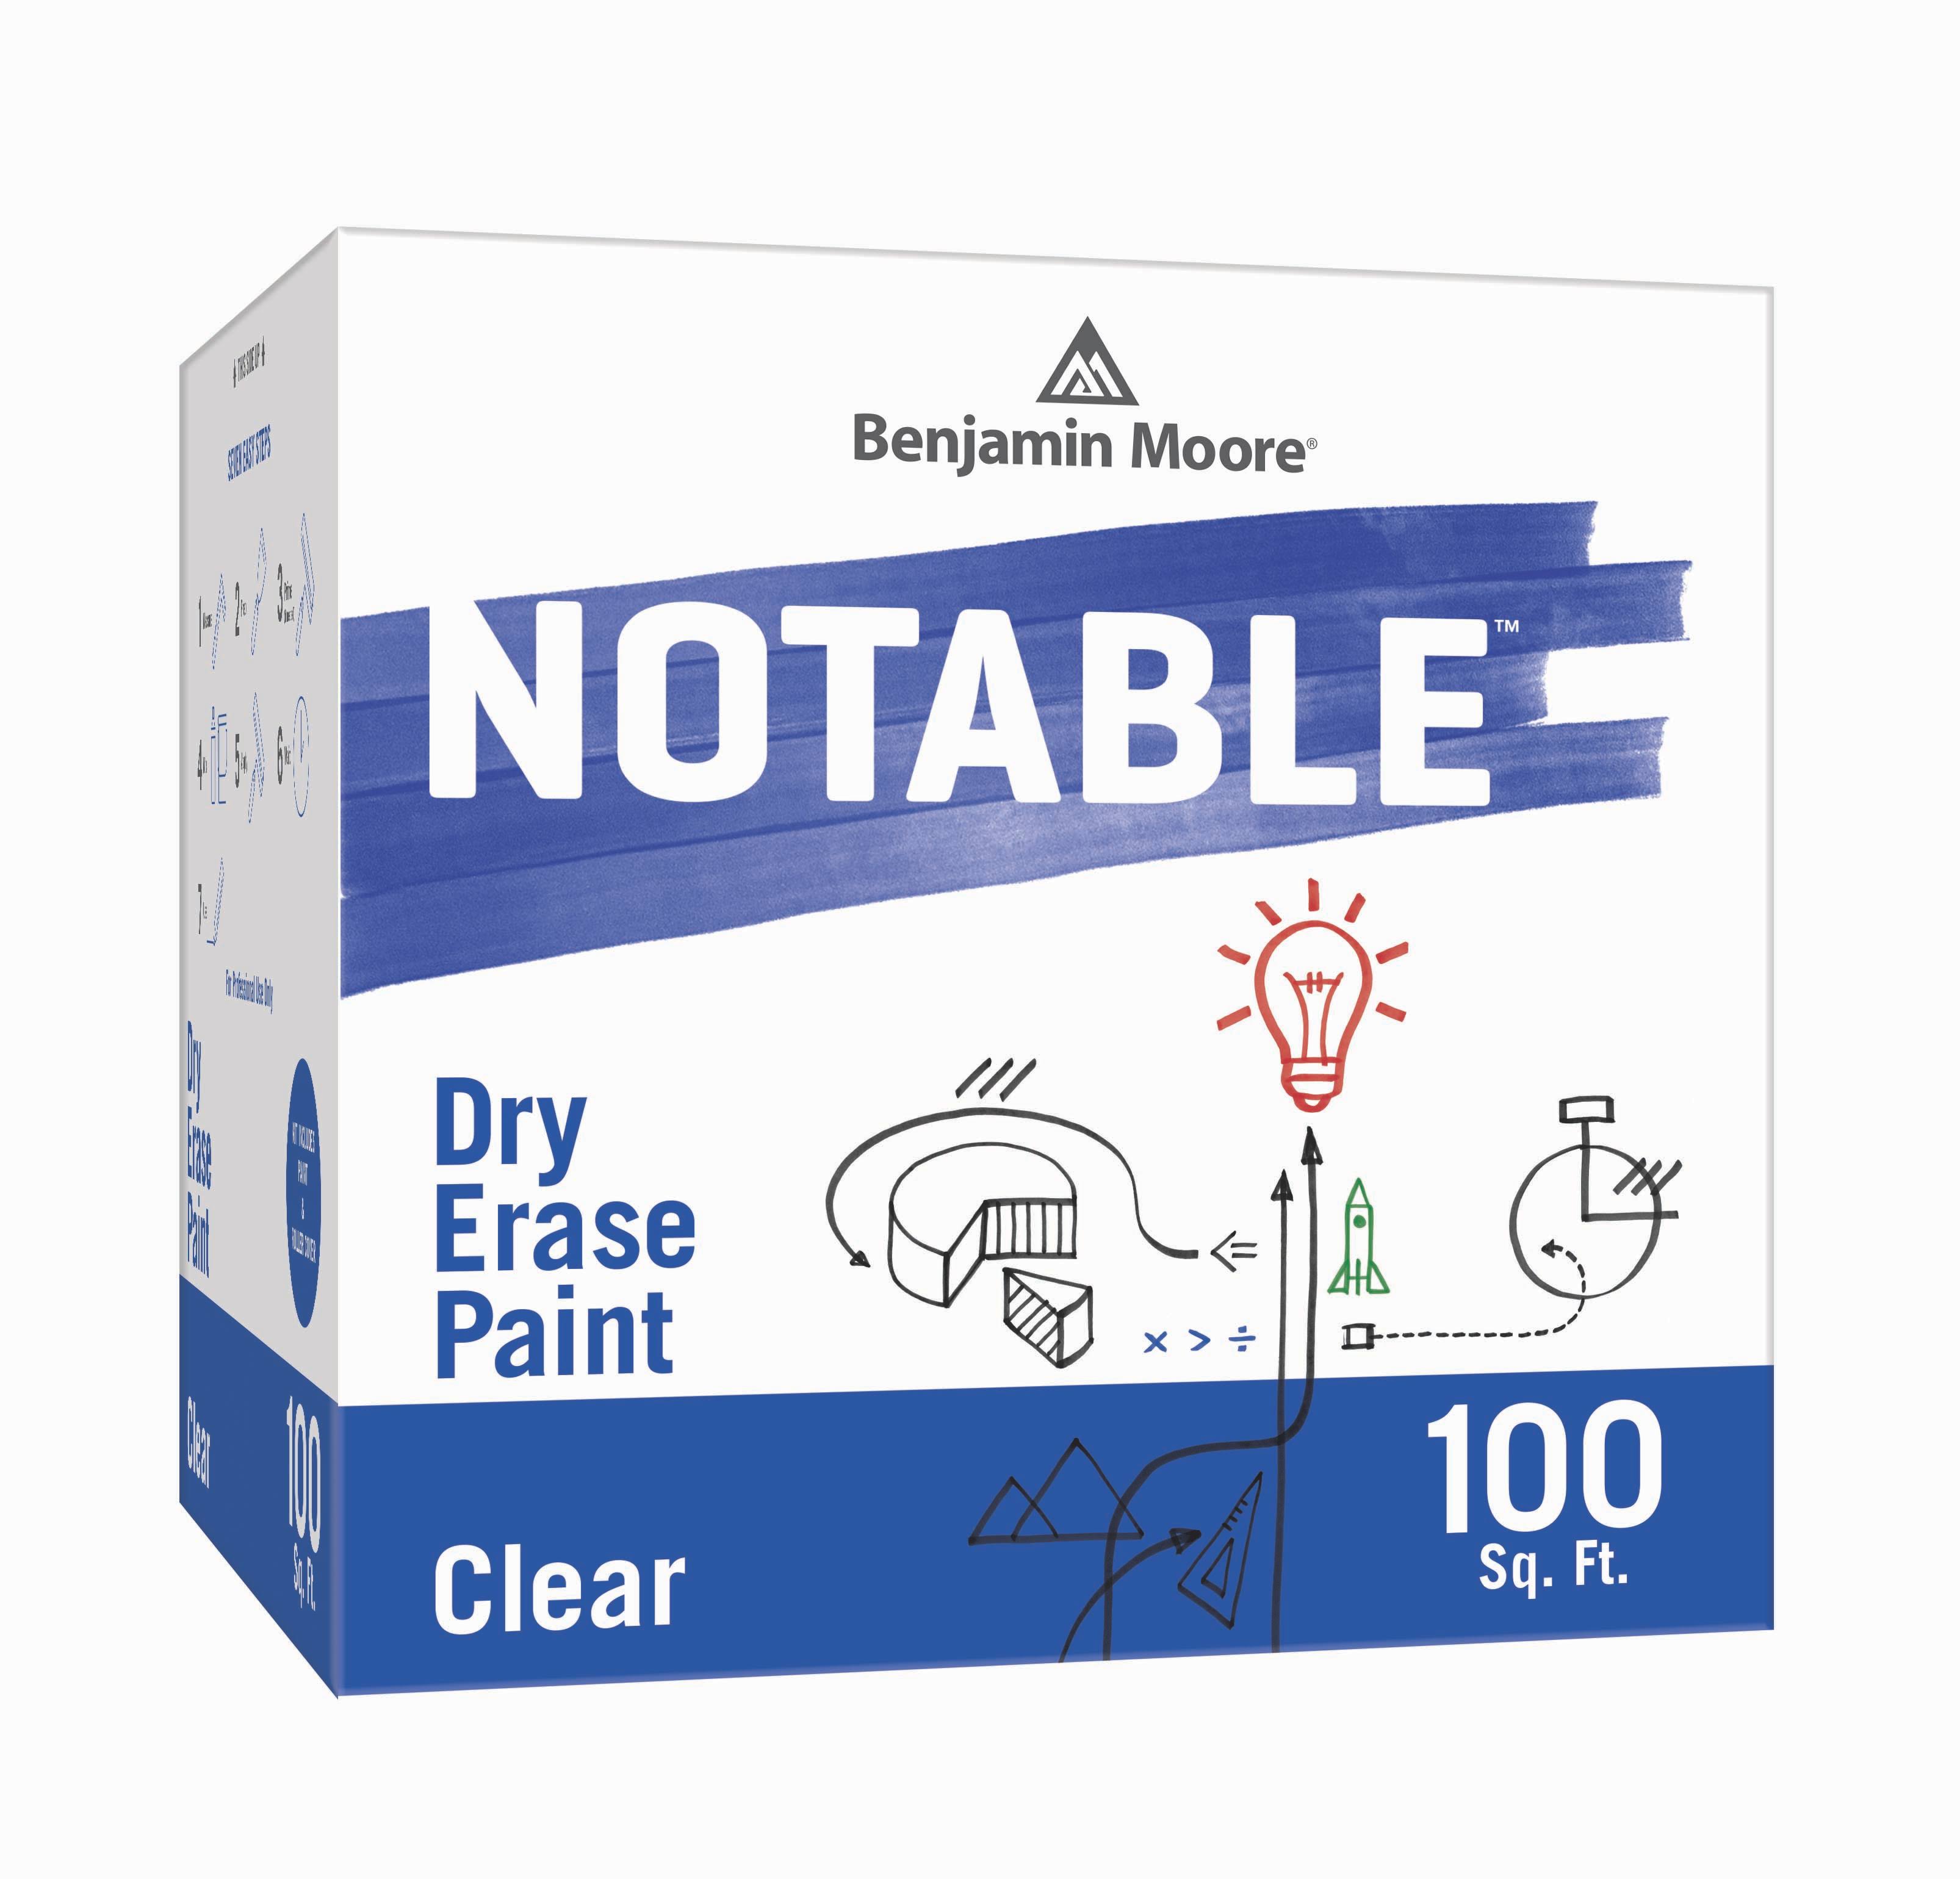 Benjamin Moore Notable Dry Erase Paint Clear 100 Sq. Foot Kit